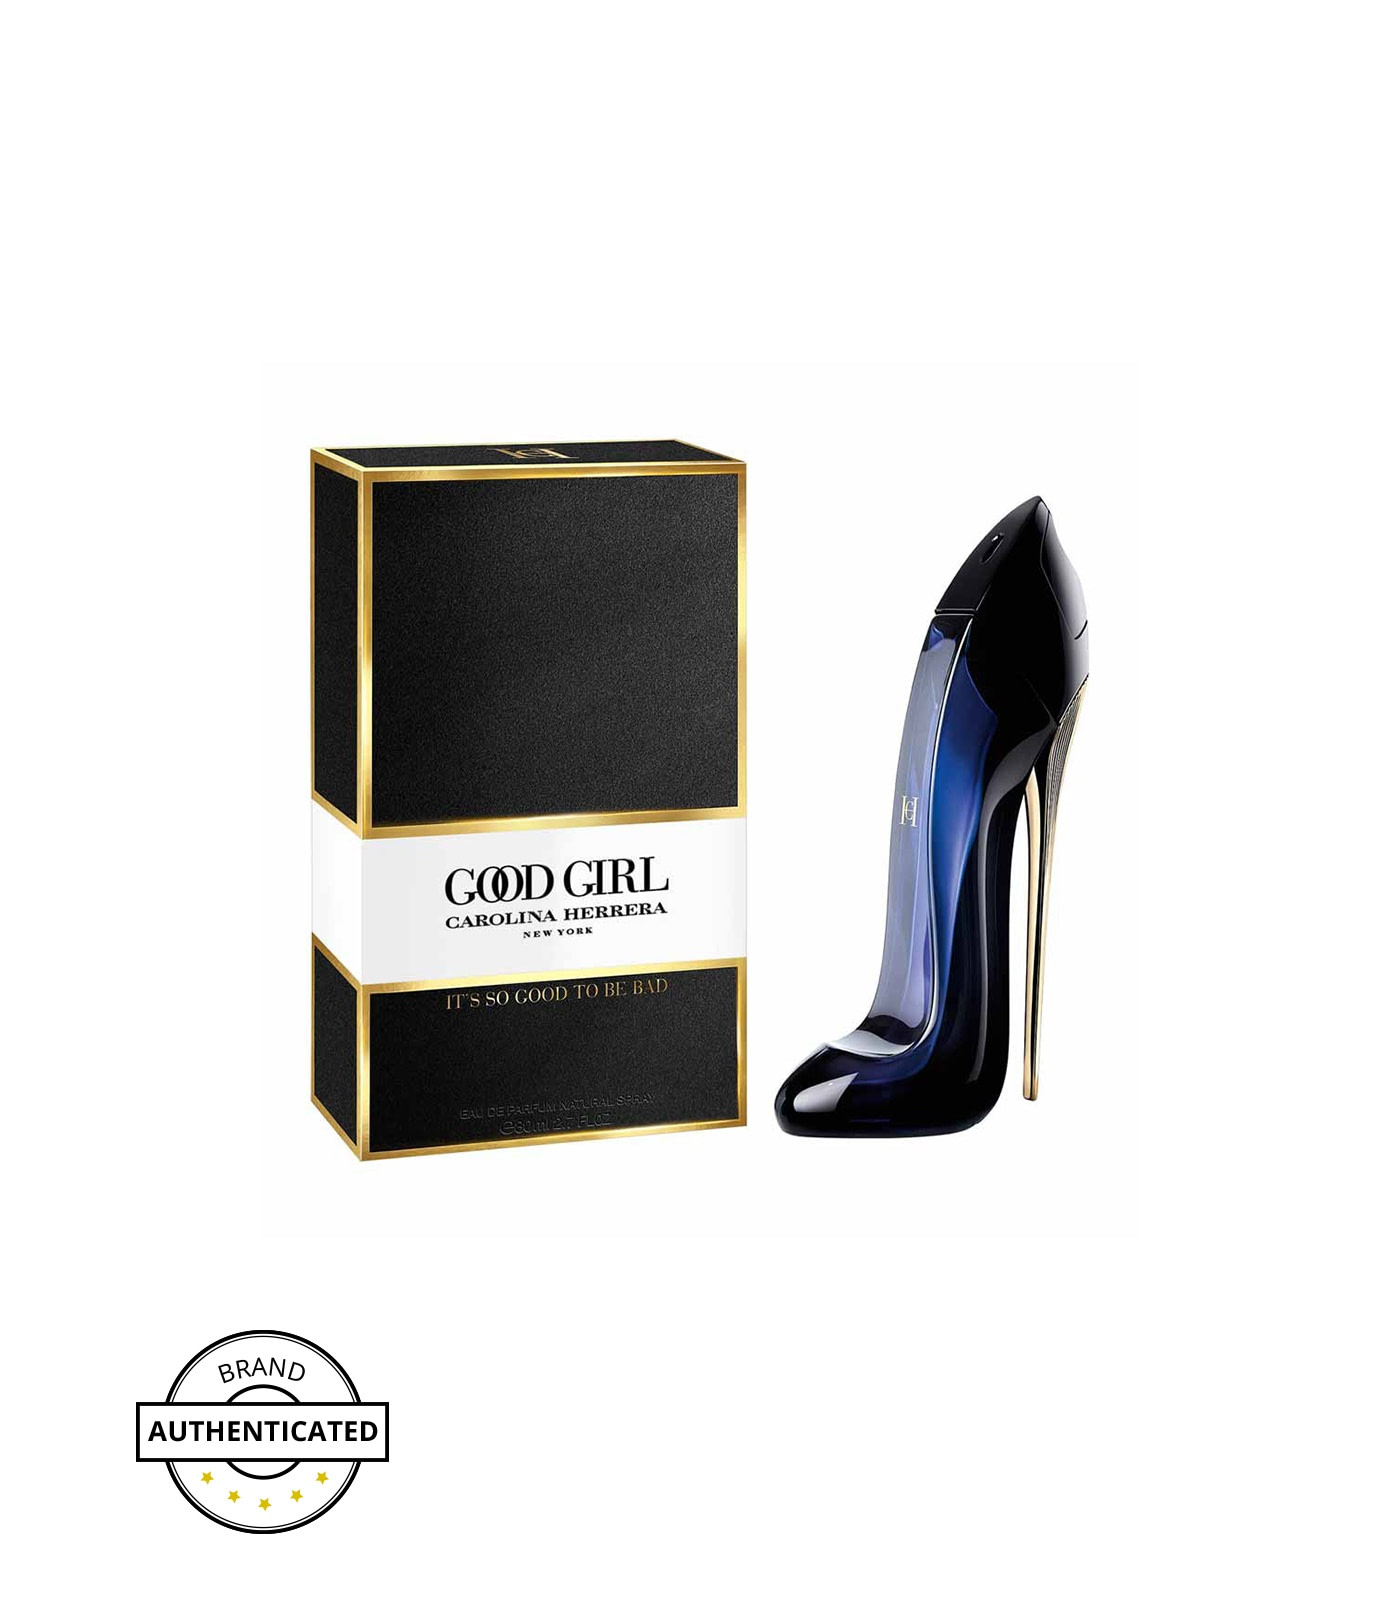 Carolina Herrera Good girl perfume for Women Edp 80 ml - Allure Essence